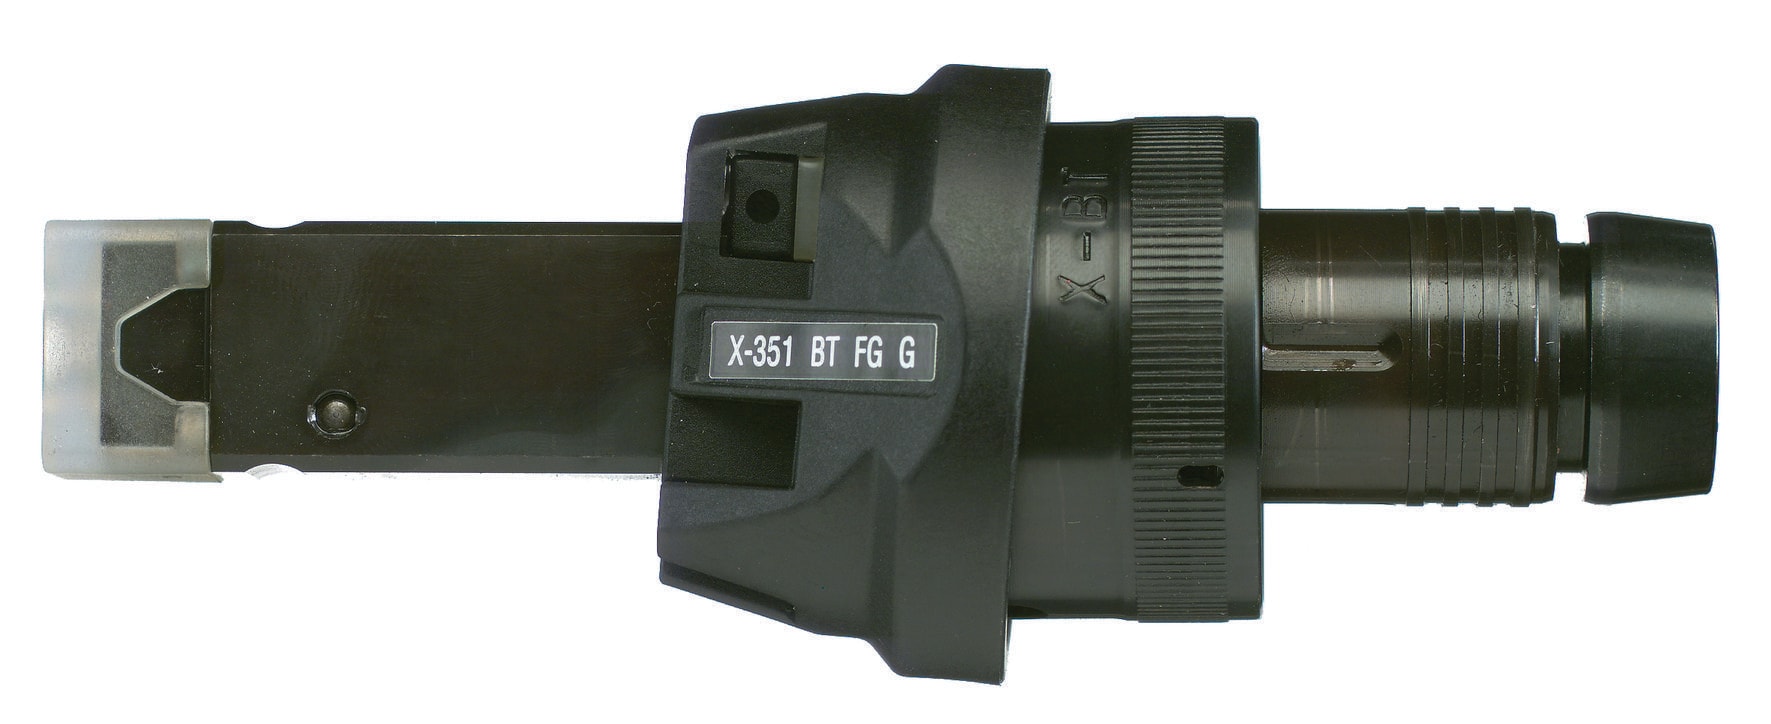 Fastener guide X-351 BT FG G - Accessories for direct fastening - Hilti